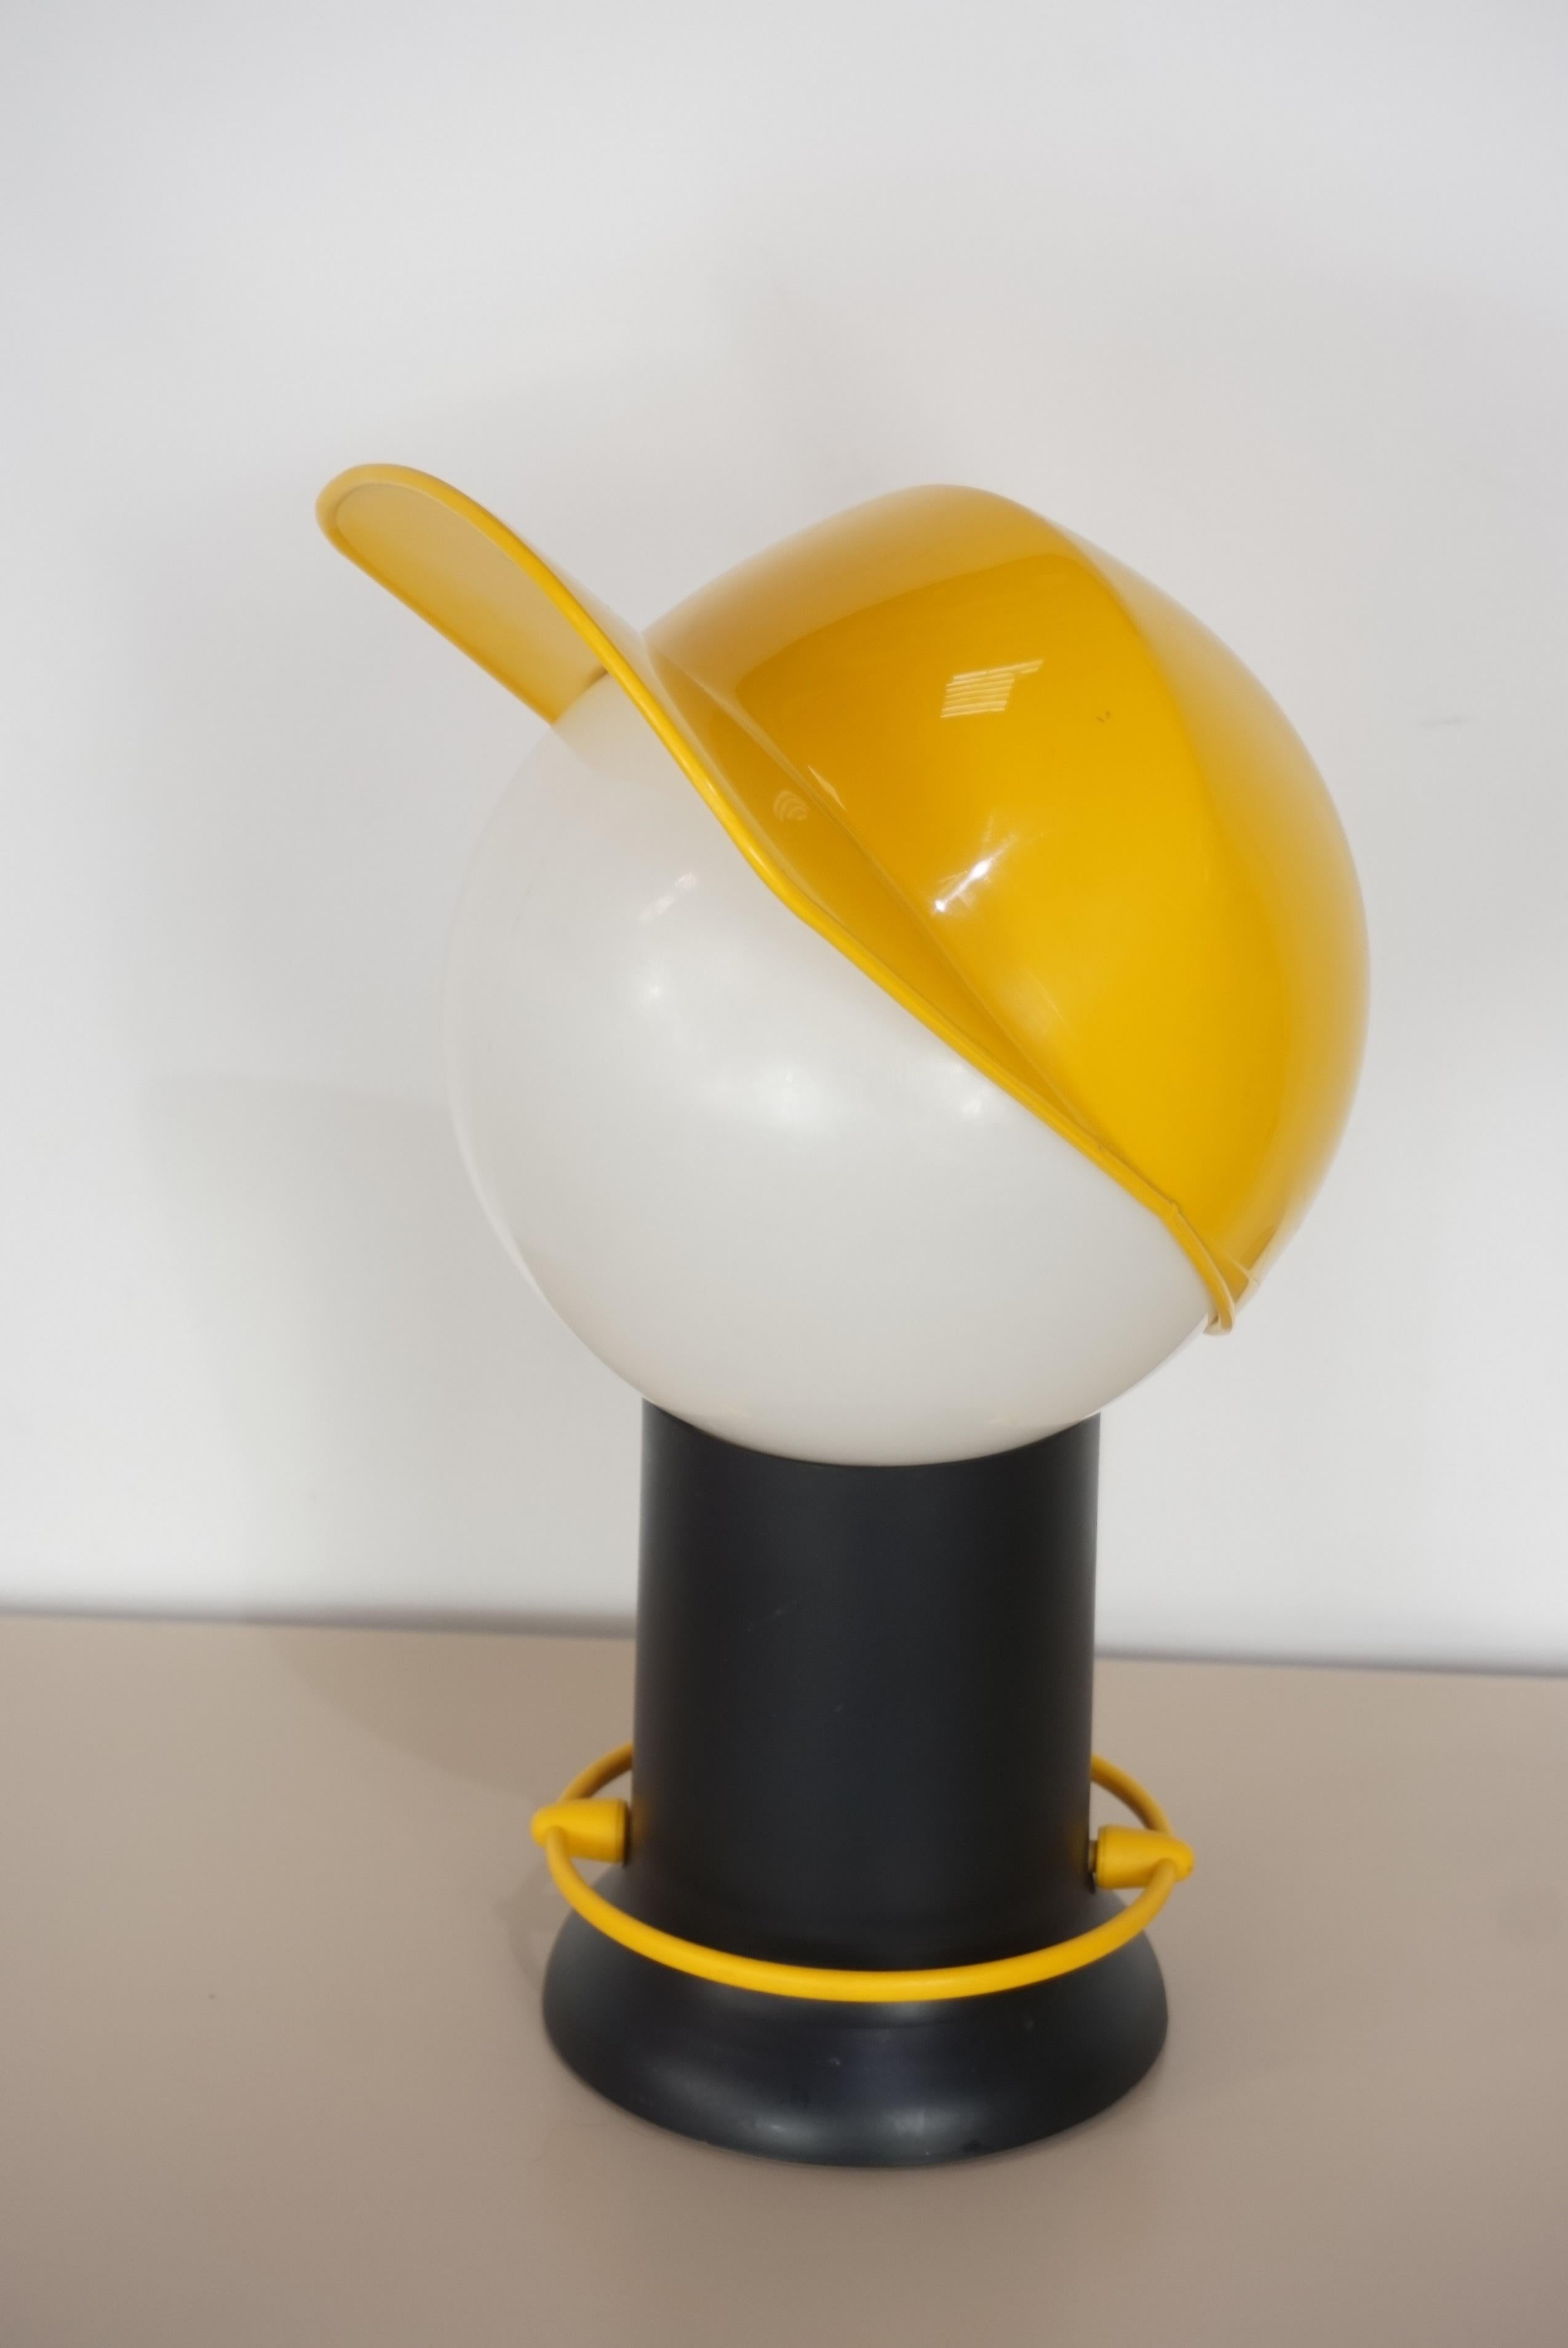 Vintage Italian design desk lamp with pretty removable yellow CAP, as named: CAP Model design by Giorgetto Giugiaro for Bilumen.